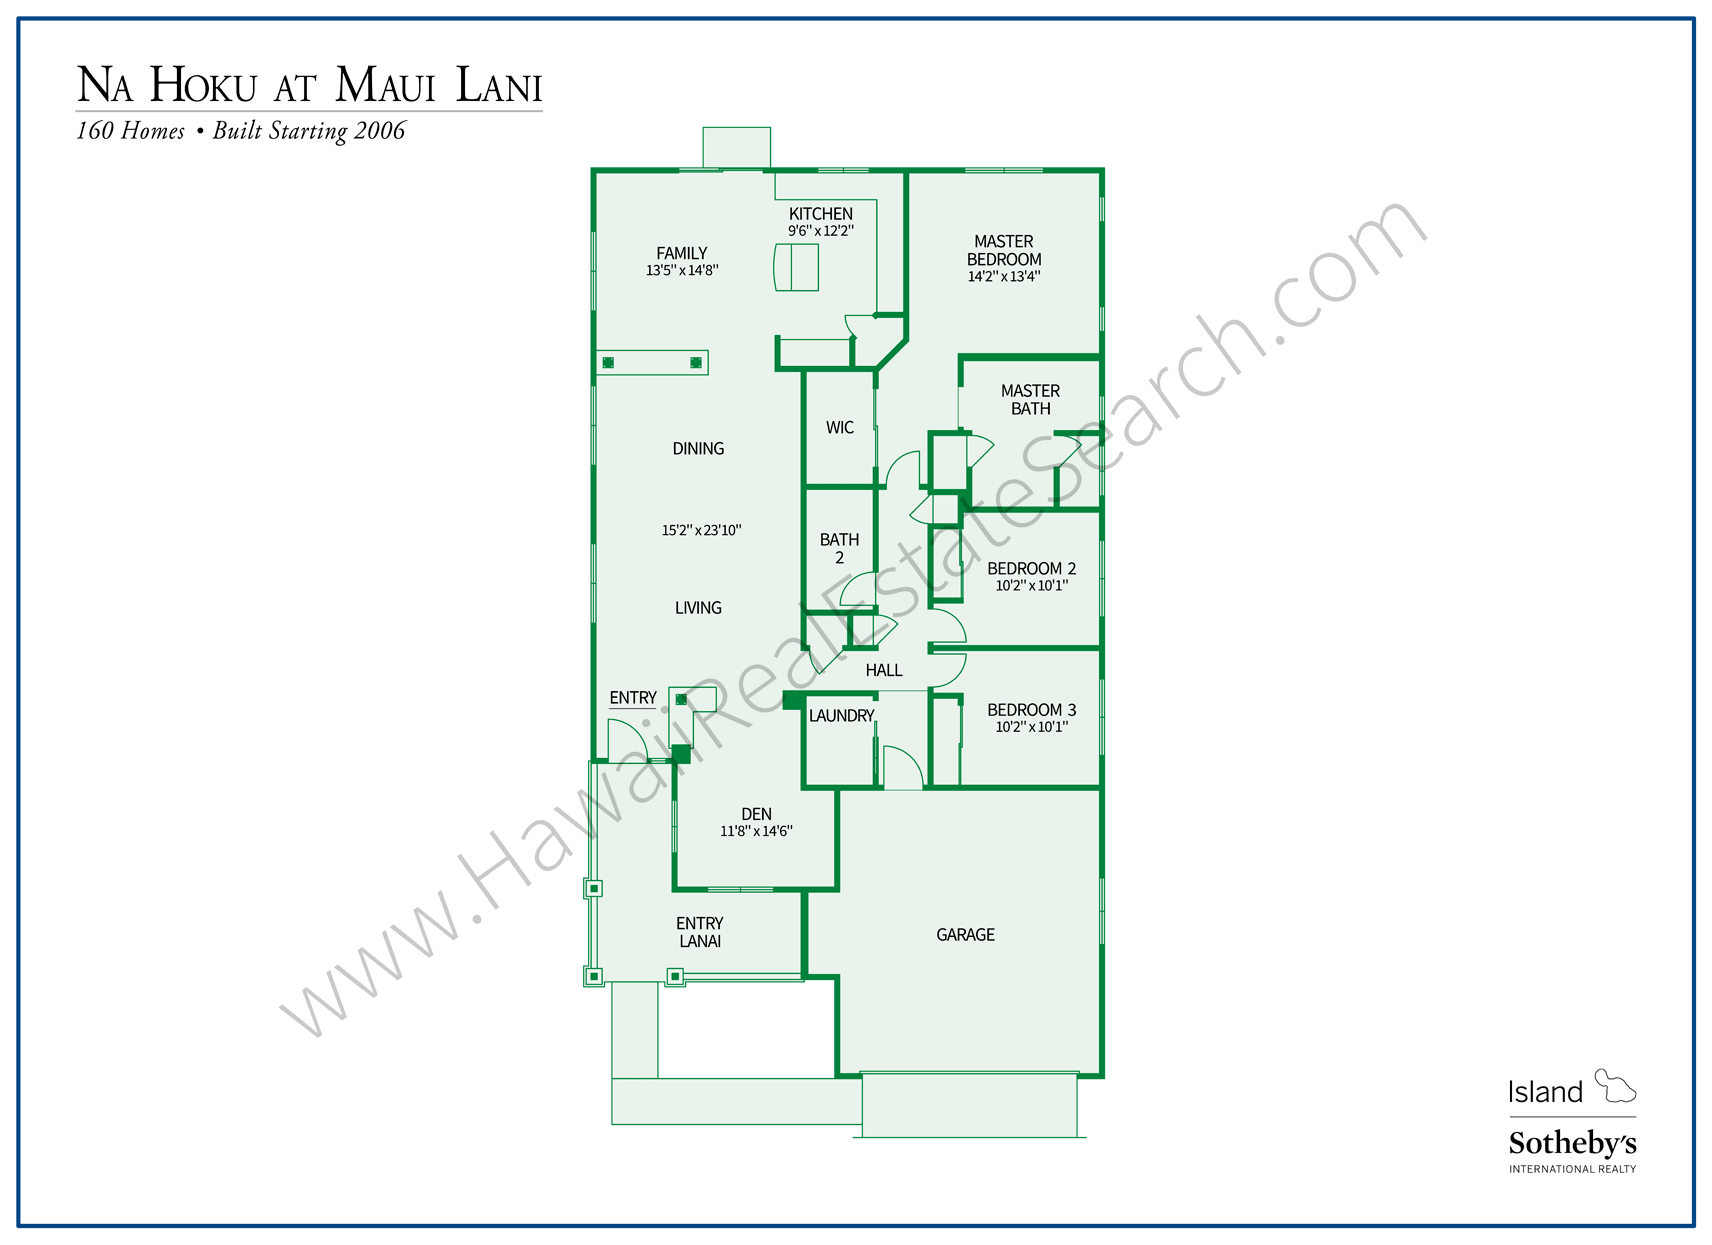 Floorplan of Na Hoku Home